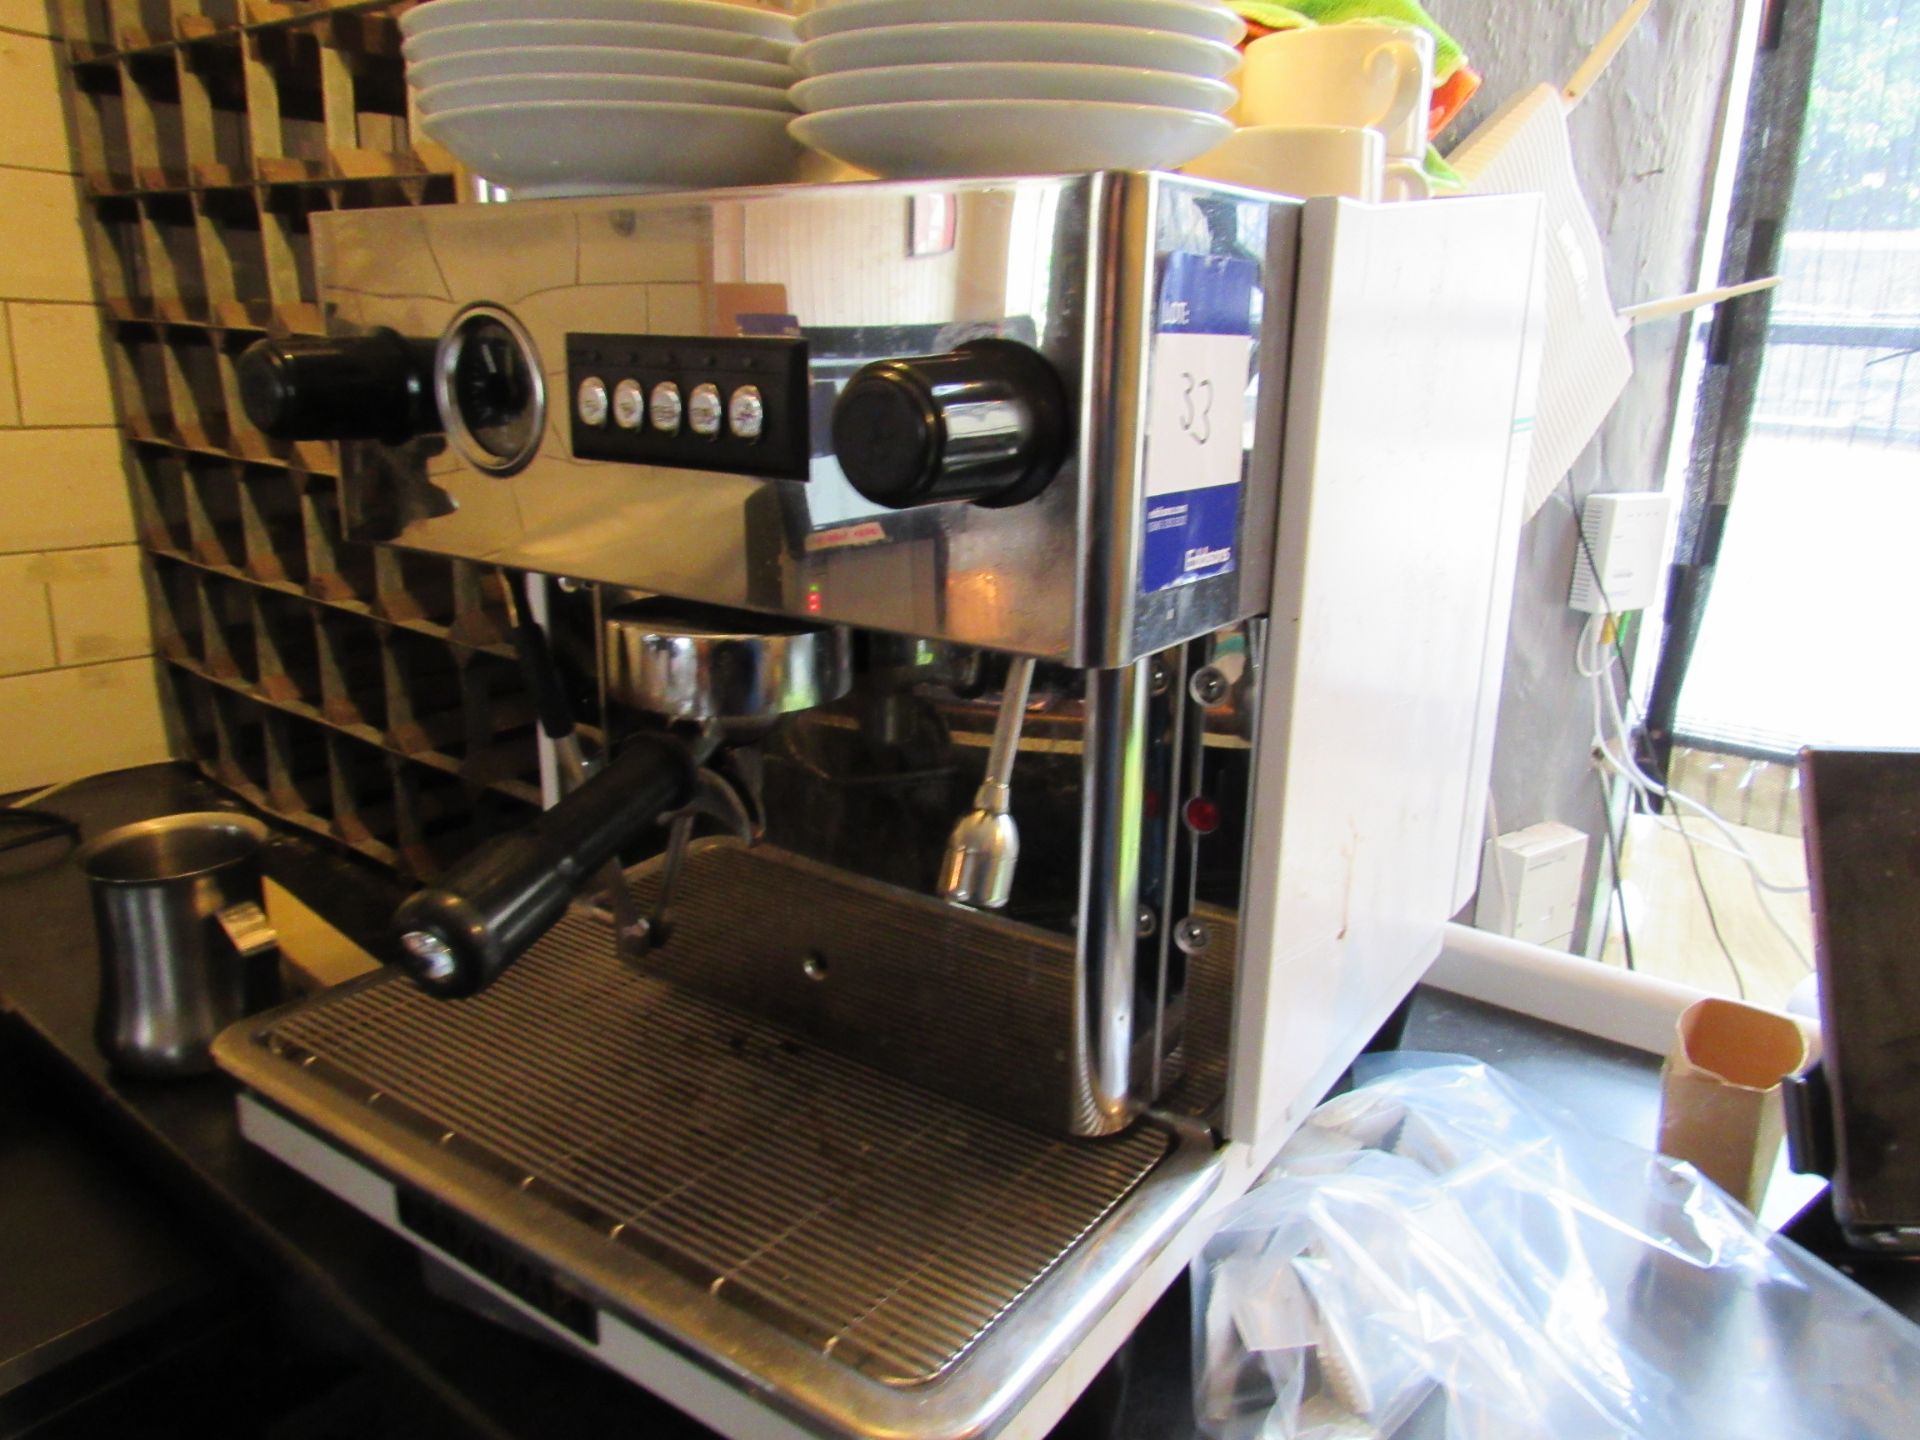 Exobar single head espresso maker and Exobar coffee grinder - Image 2 of 3